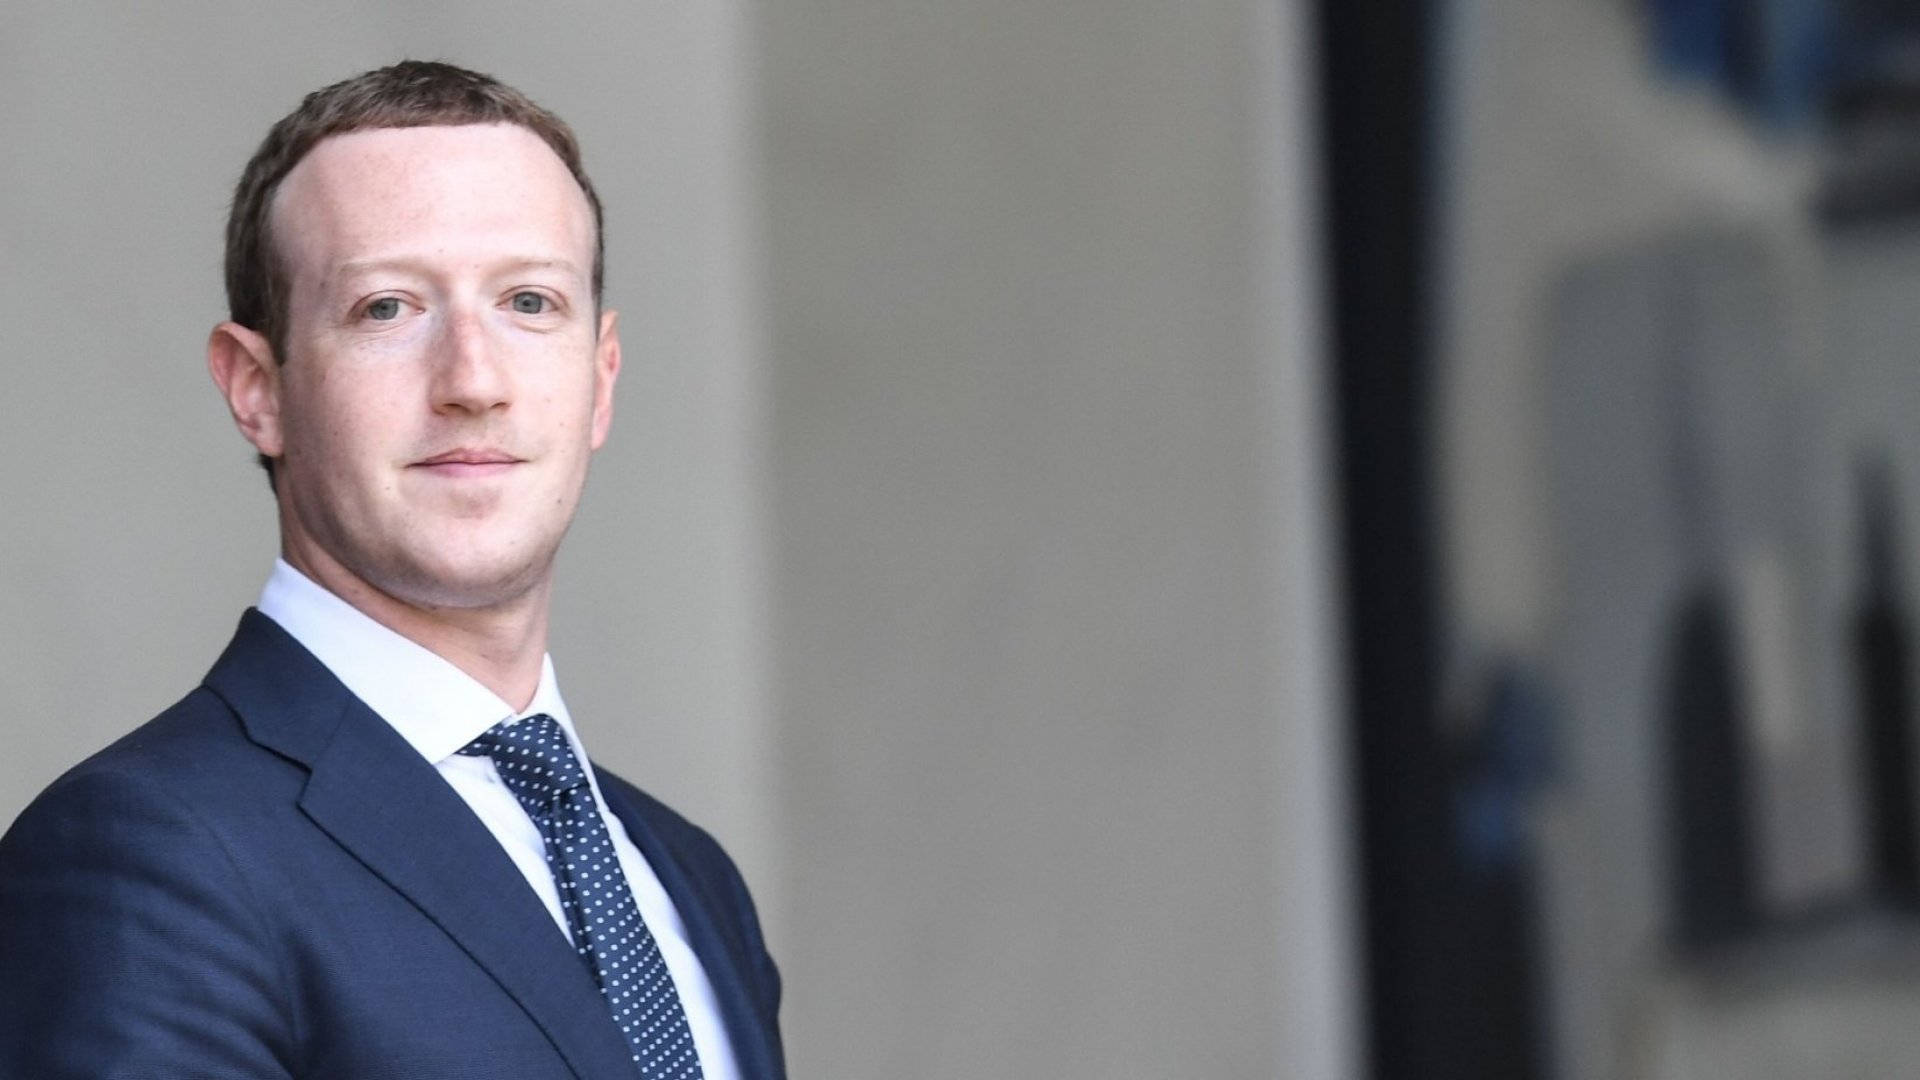 Mark Zuckerberg In Formal Suit Background